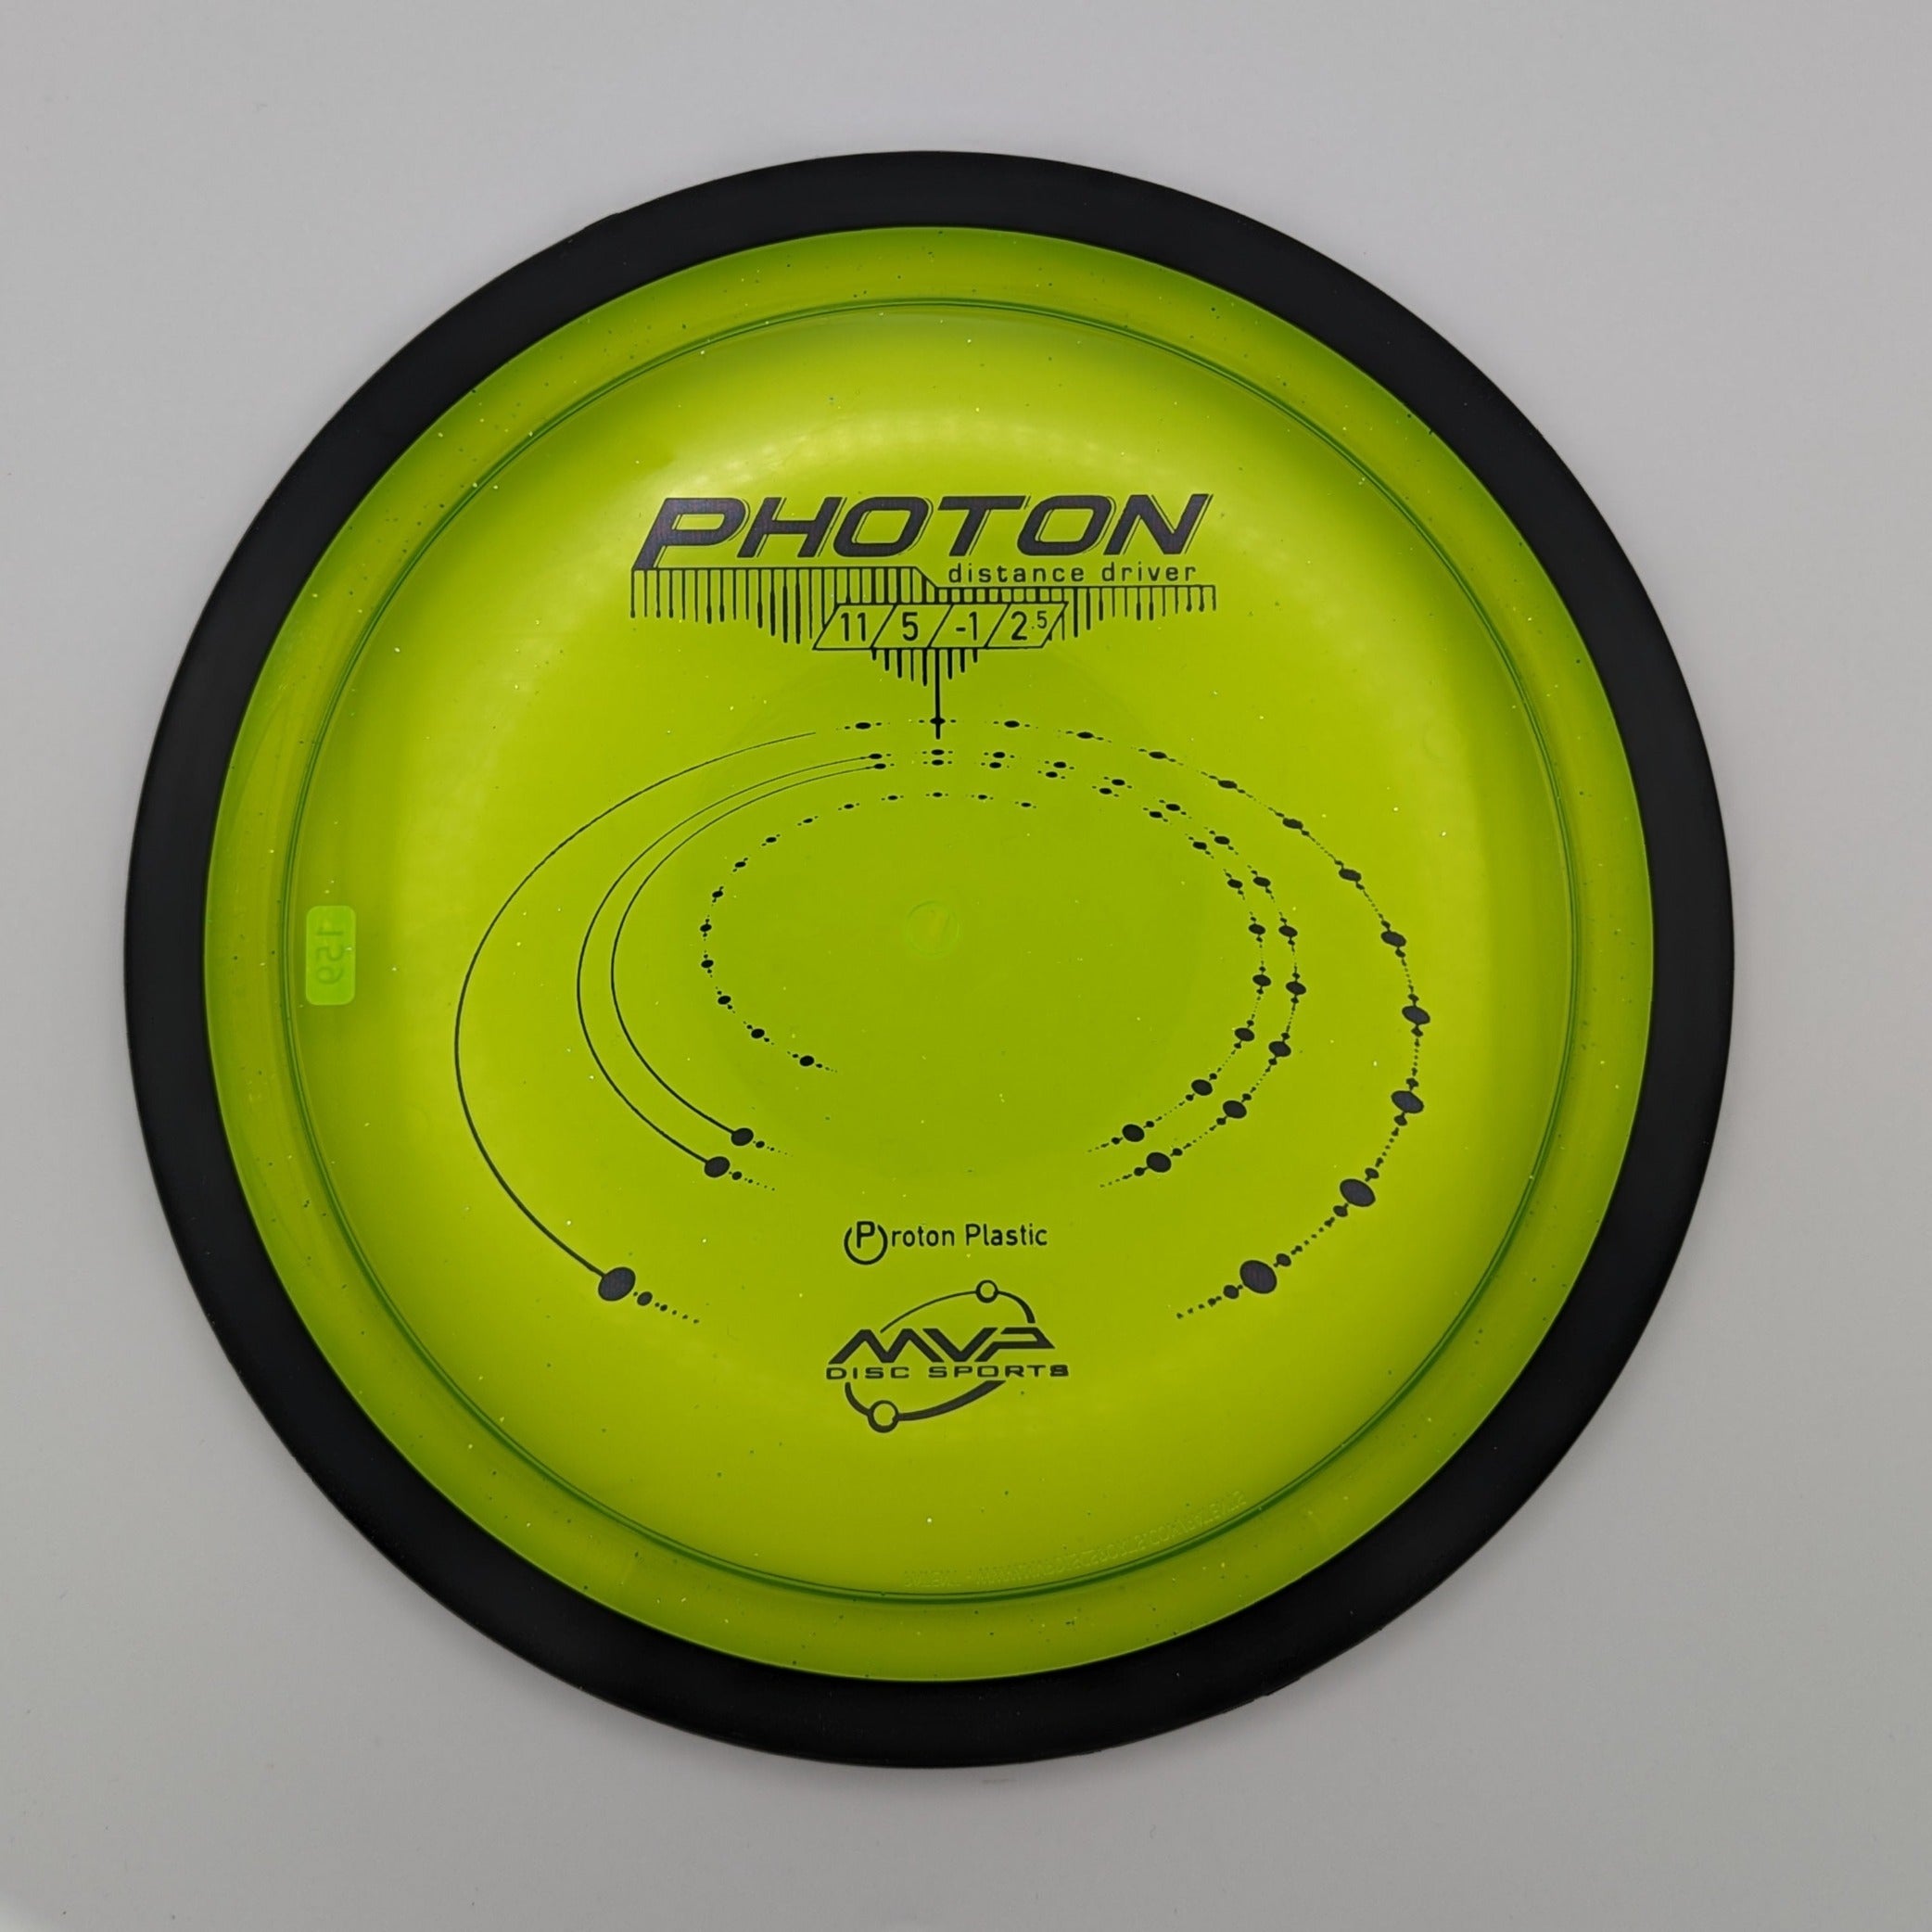 MVP Photon Distance Driver Proton Plastic